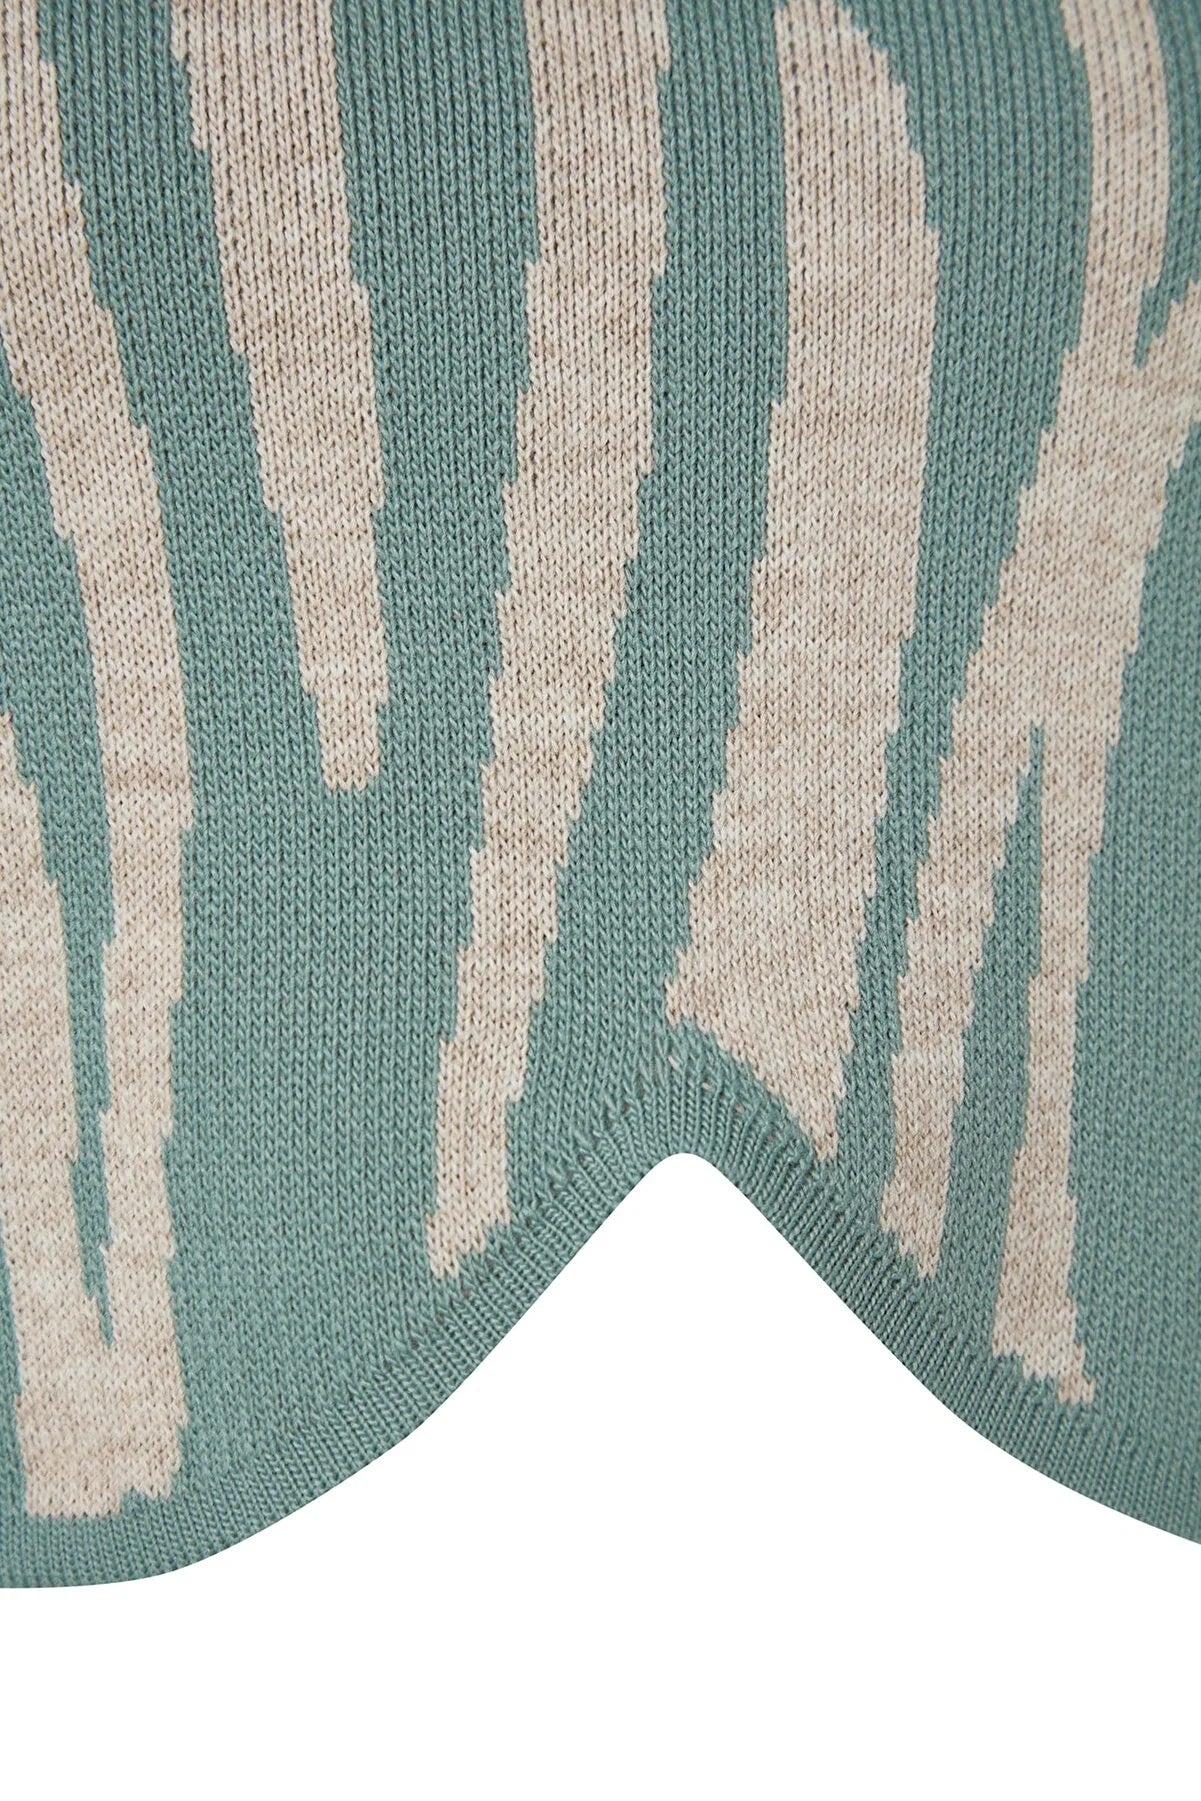 Bombo |cropped sweater-trui met zebra print beige | EXTRA 30% KORTING